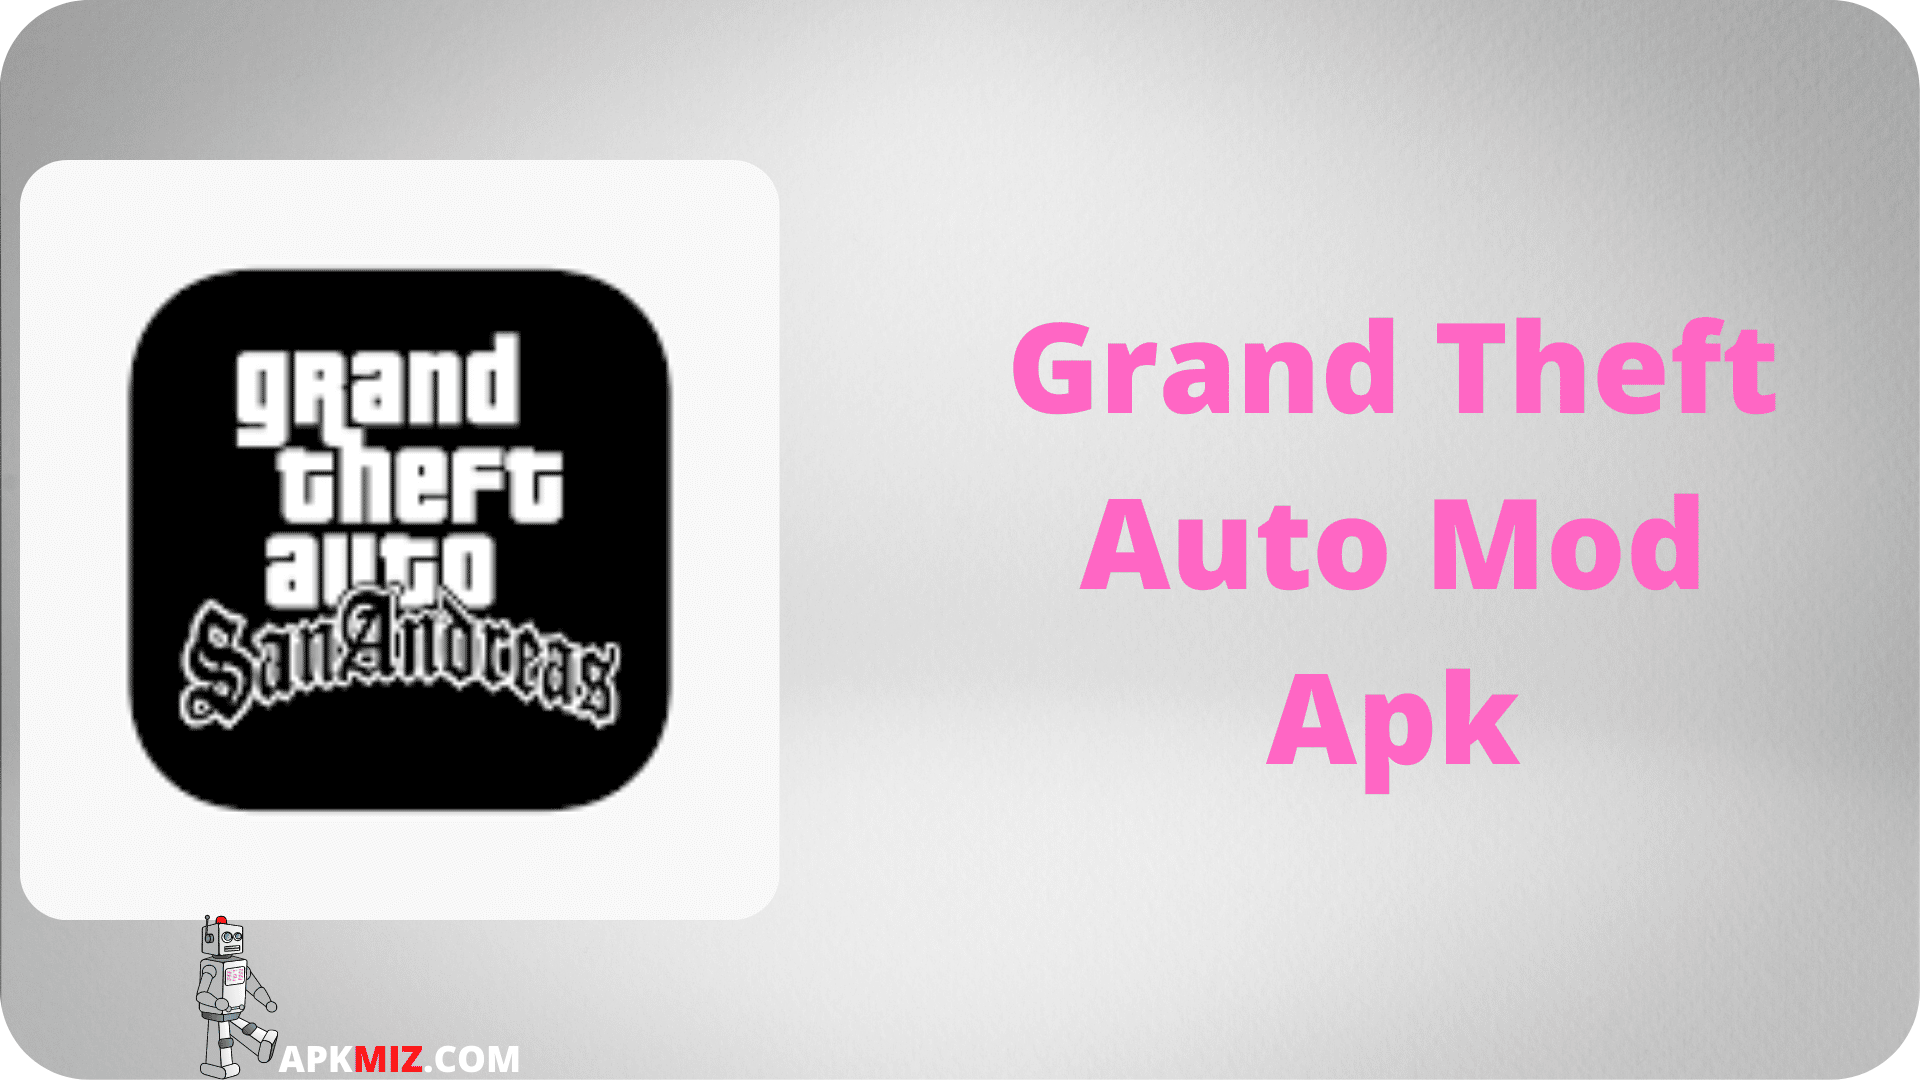 Grand Theft Auto Mod Apk